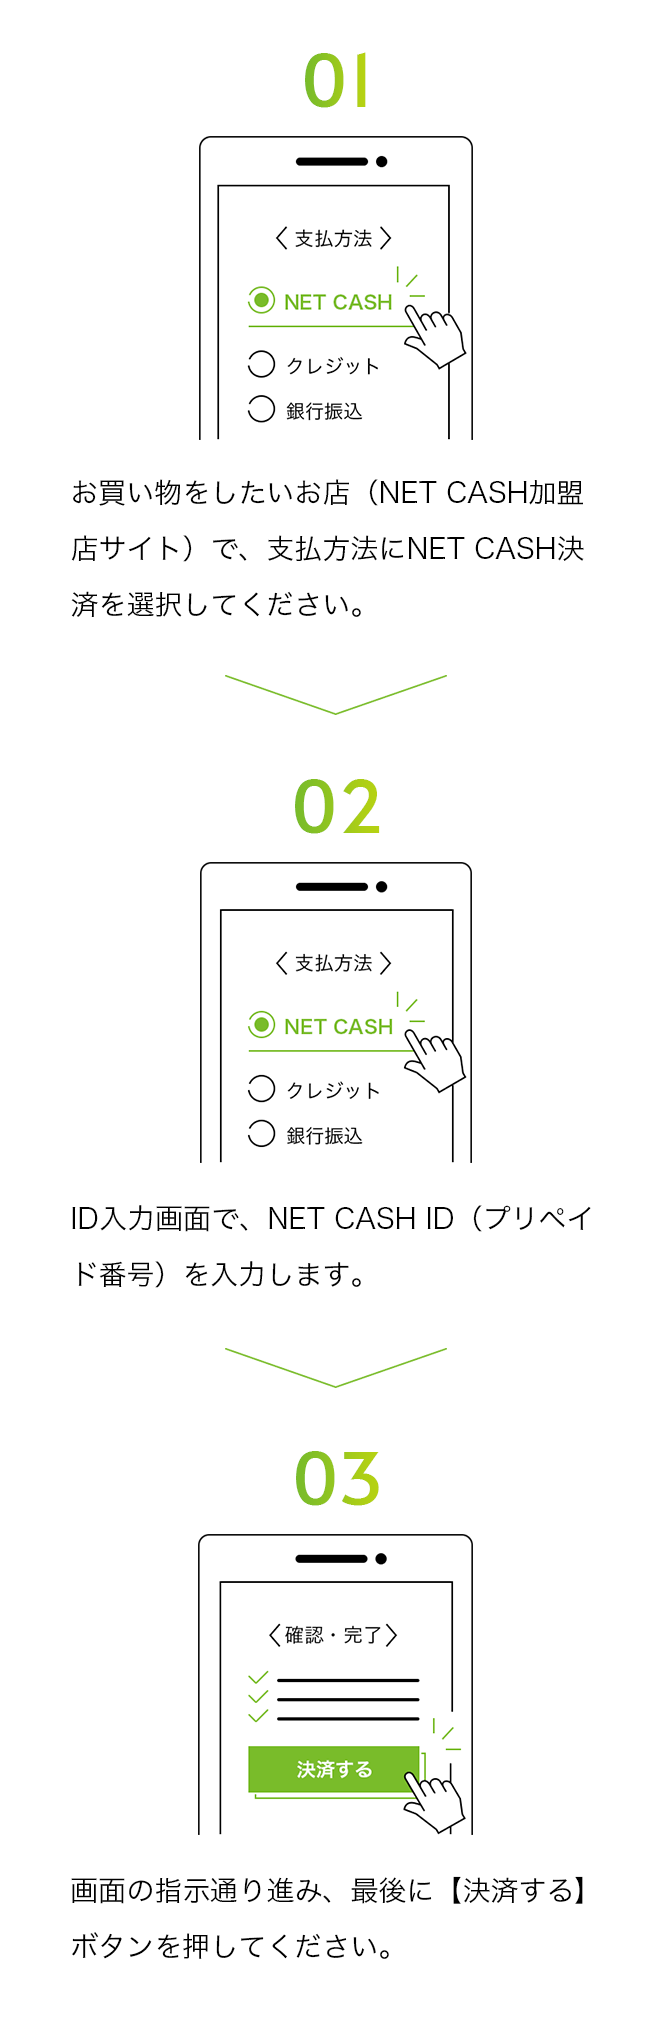 NET CASH／mora music cardのご利用方法